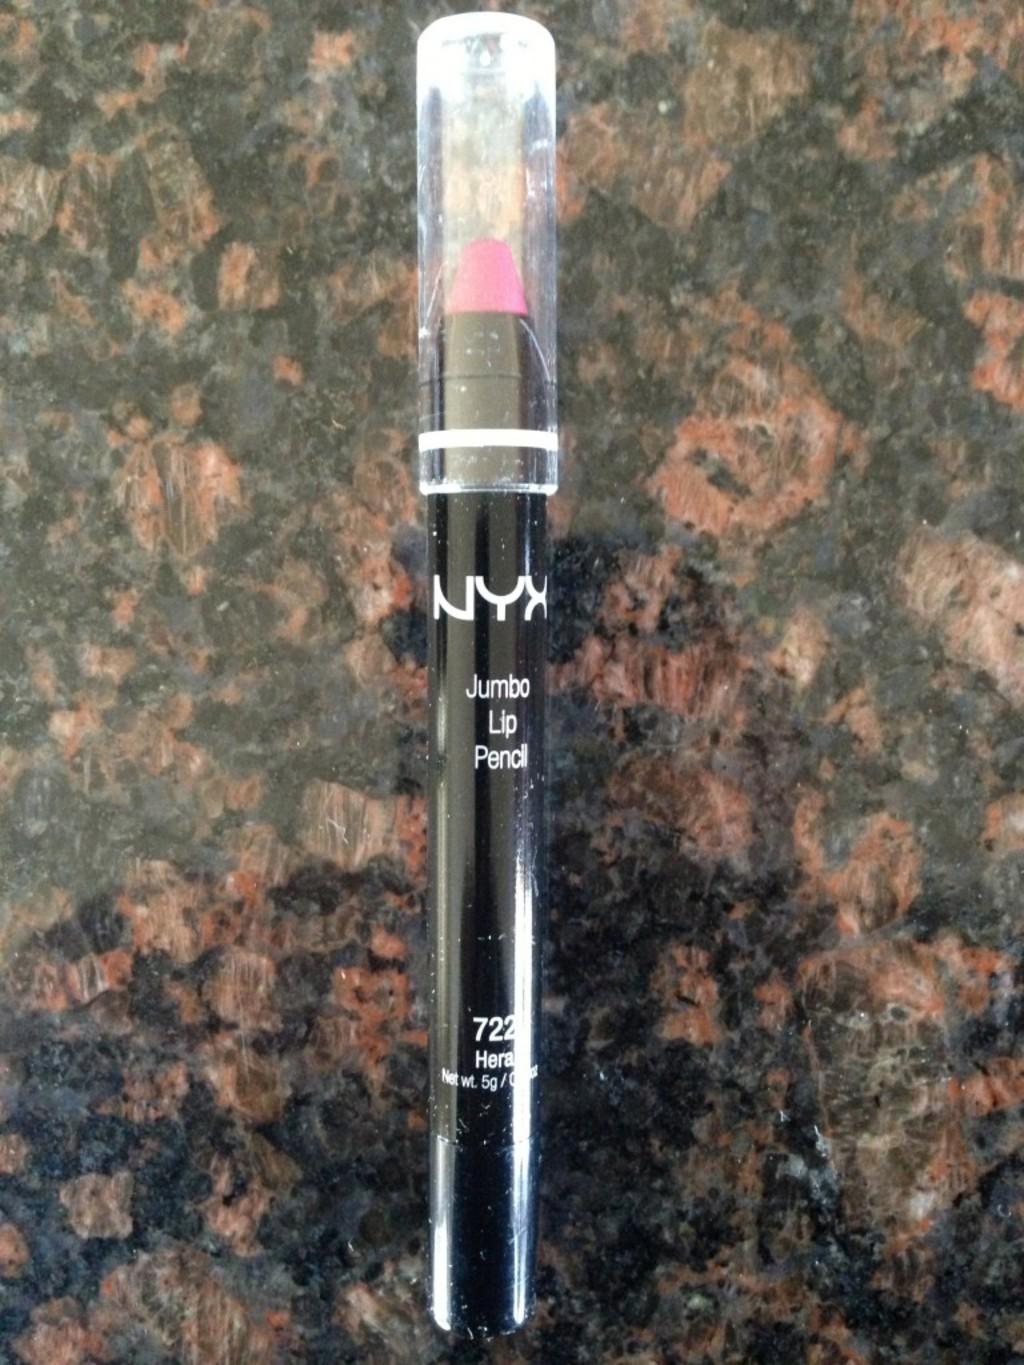 NYX Jump Lip Pencil